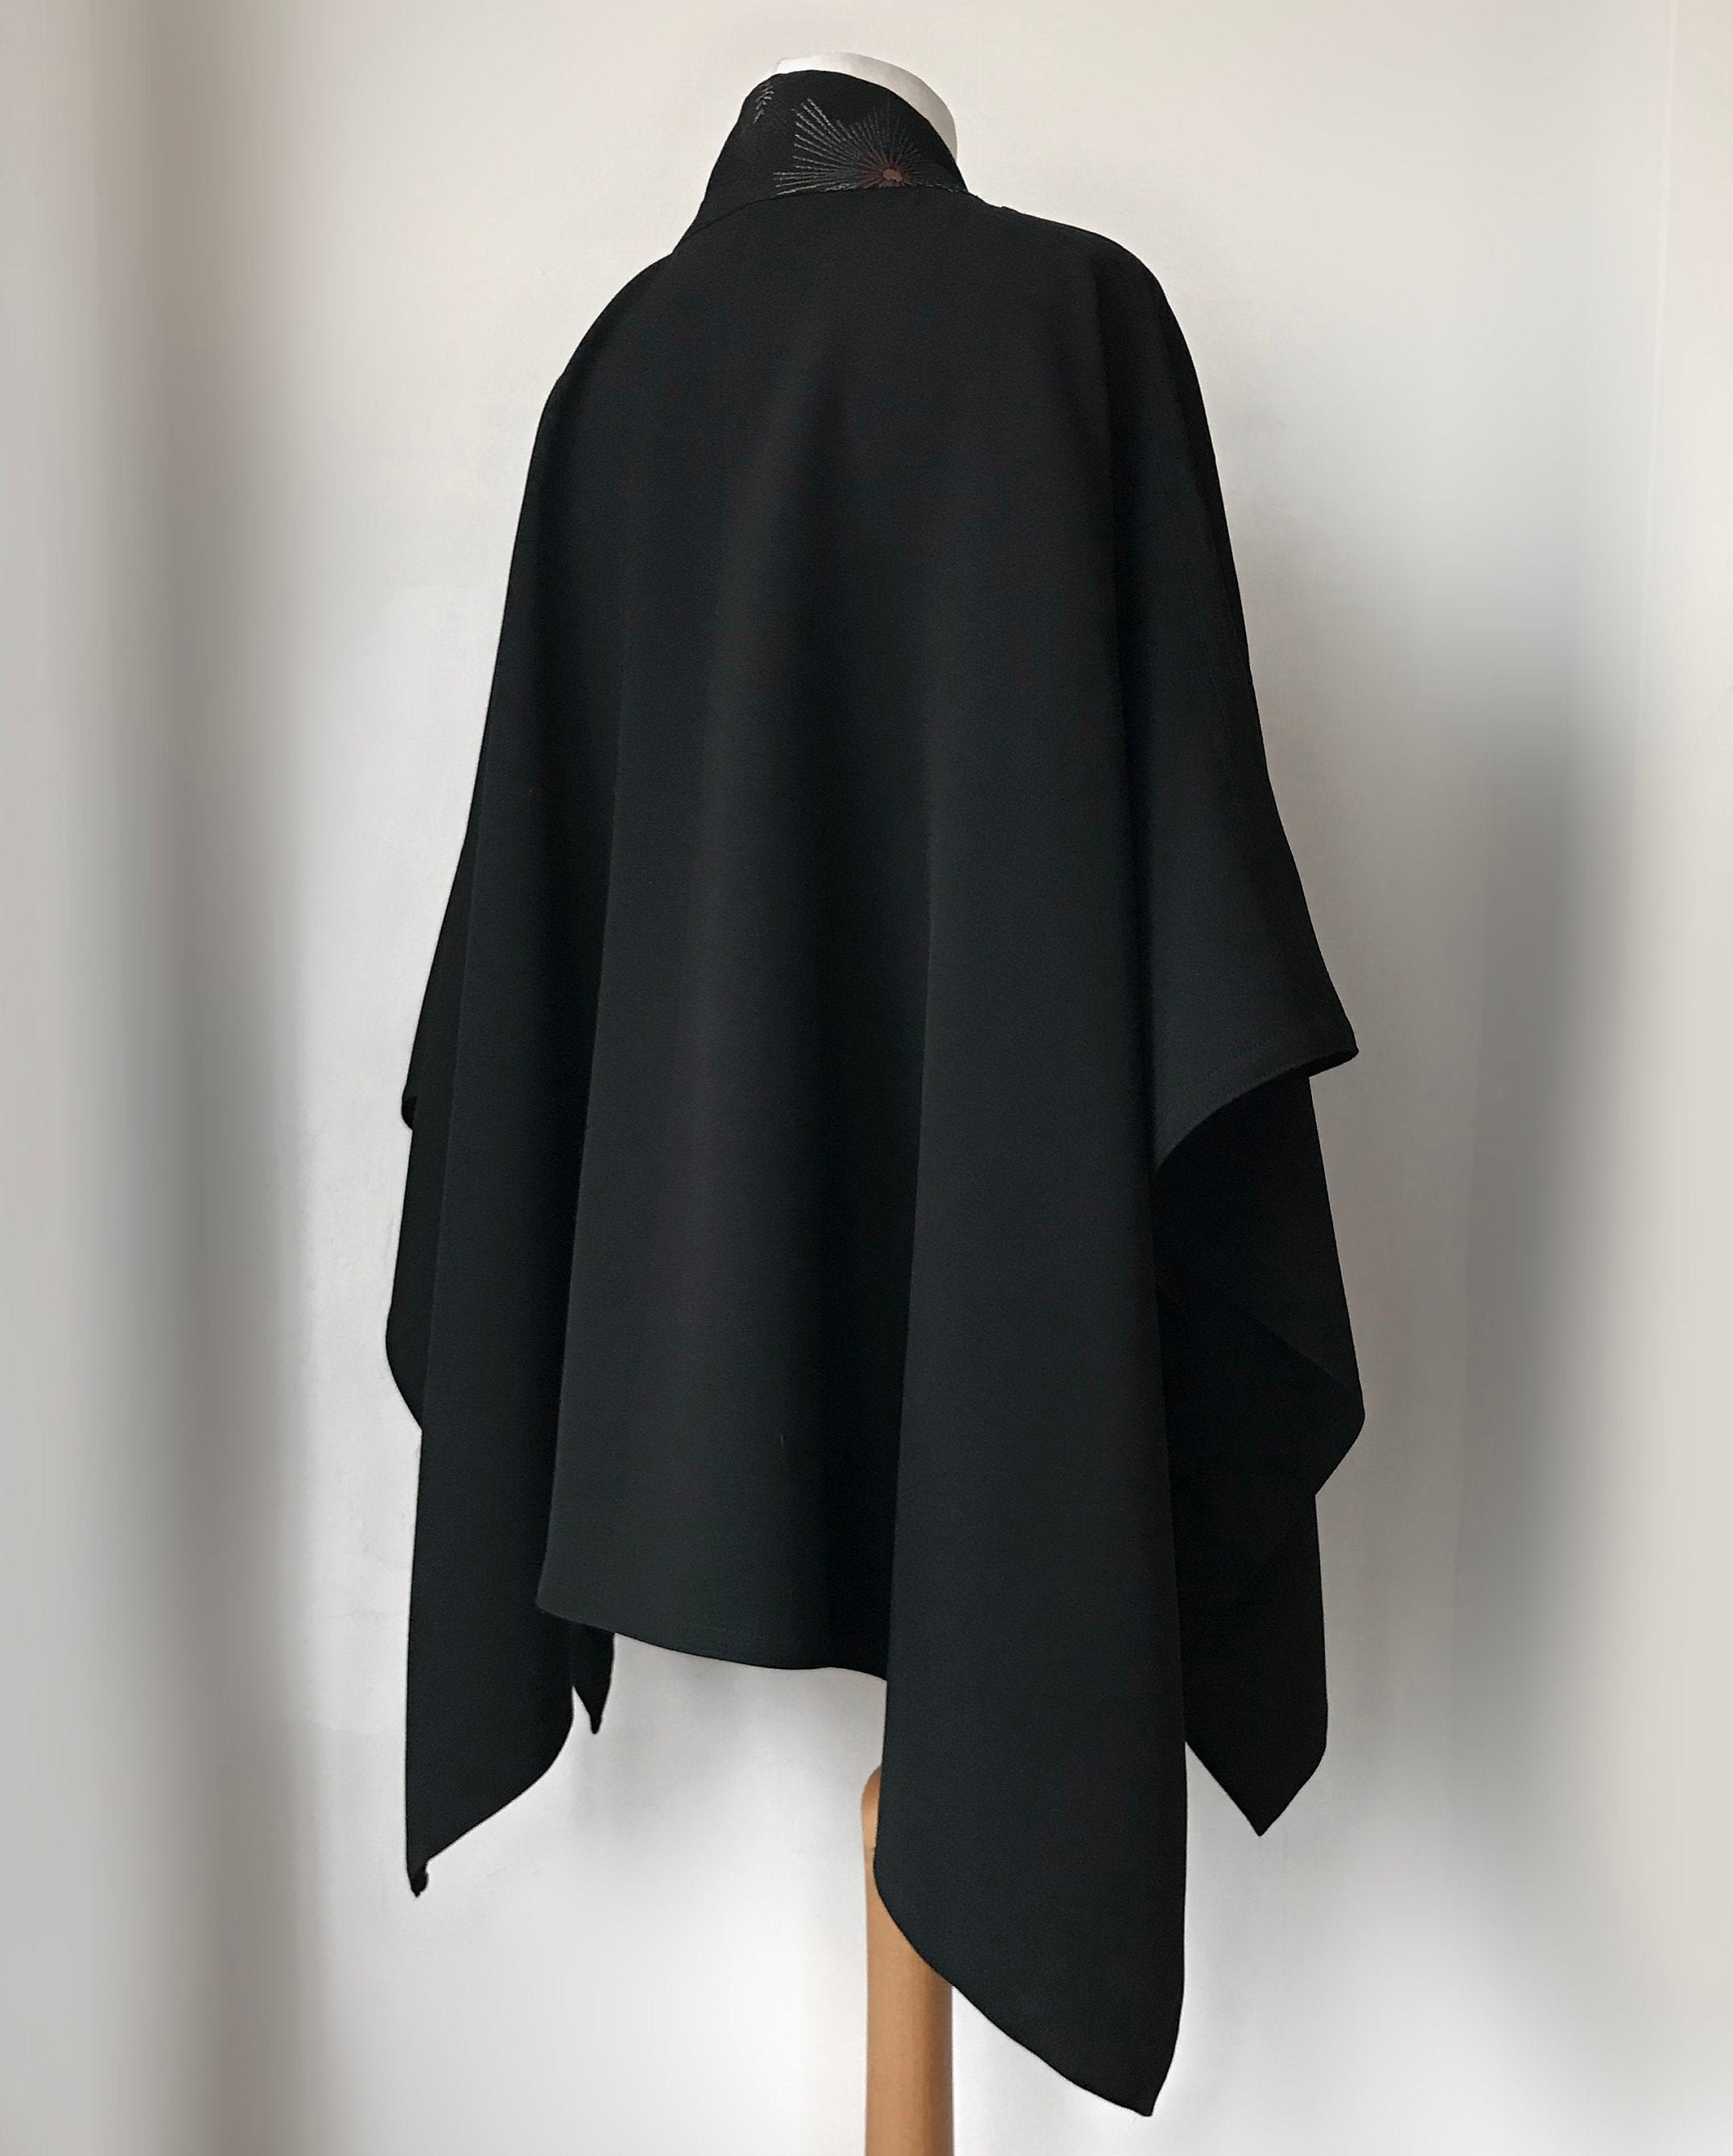 Long Black Cape Coat / Wool Cape / Silk Cape / Opera Coat / | Etsy